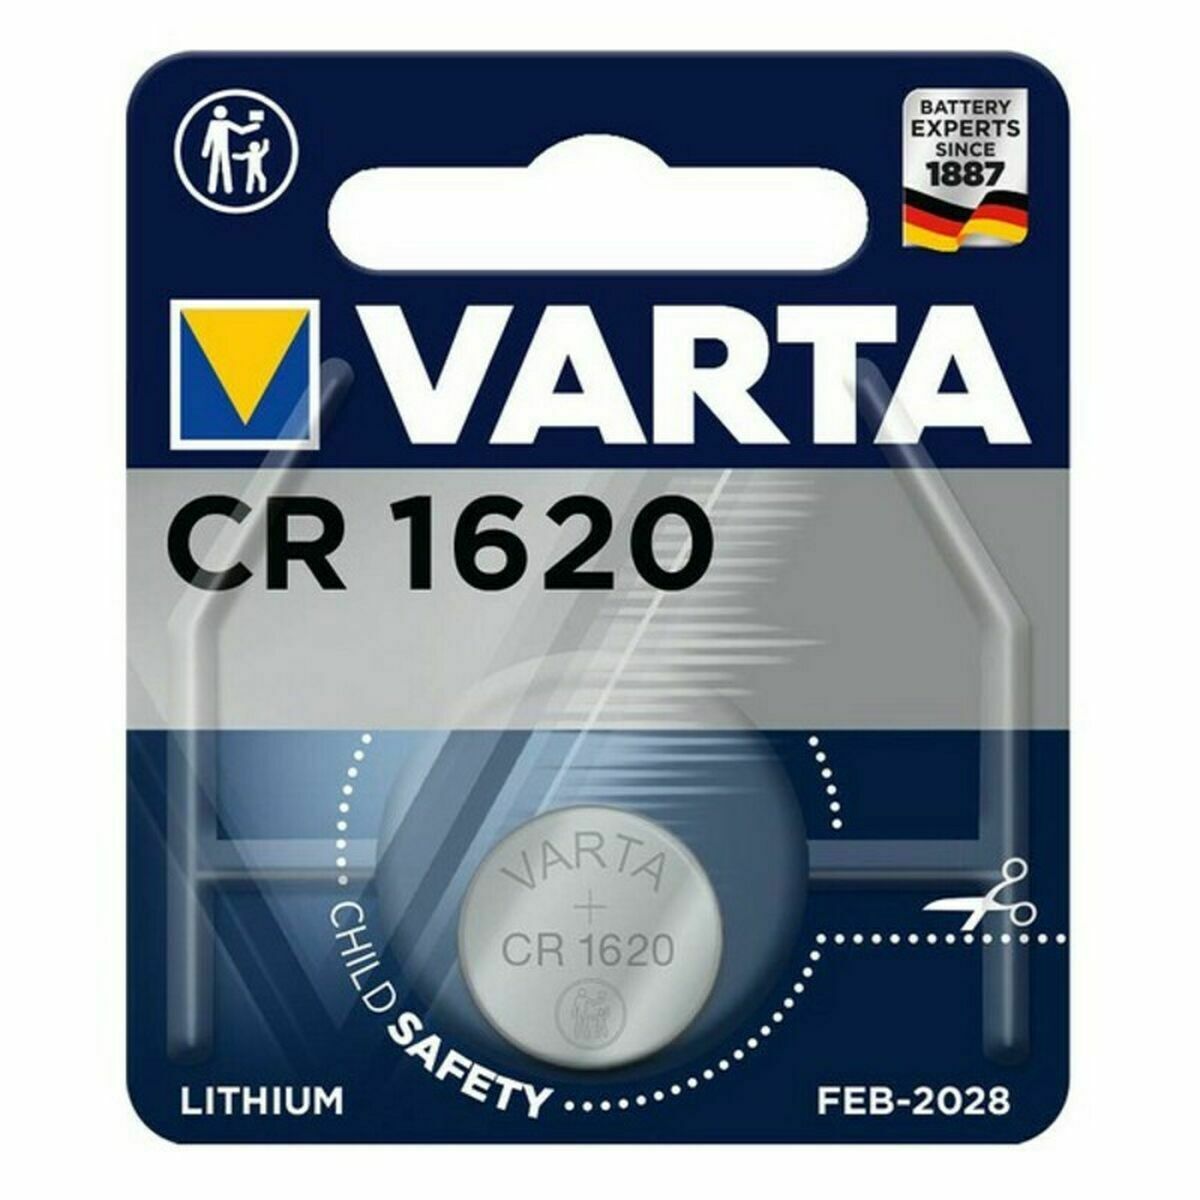 Lithium-Knopfzelle Varta CR 1620 CR1620 3 V 70 mAh 1.55 V